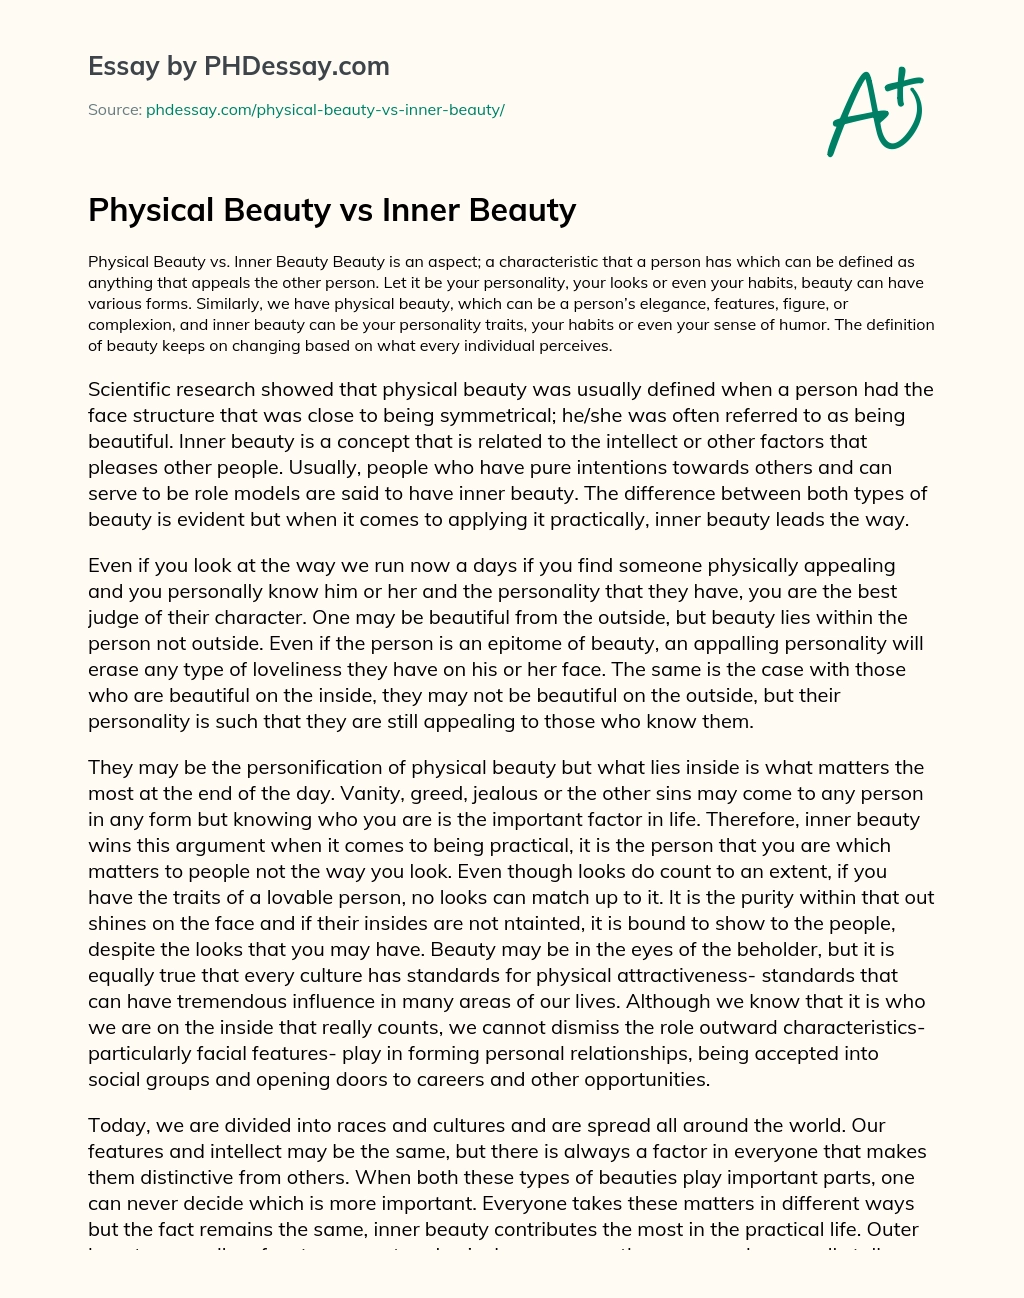 Physical Beauty vs Inner Beauty essay